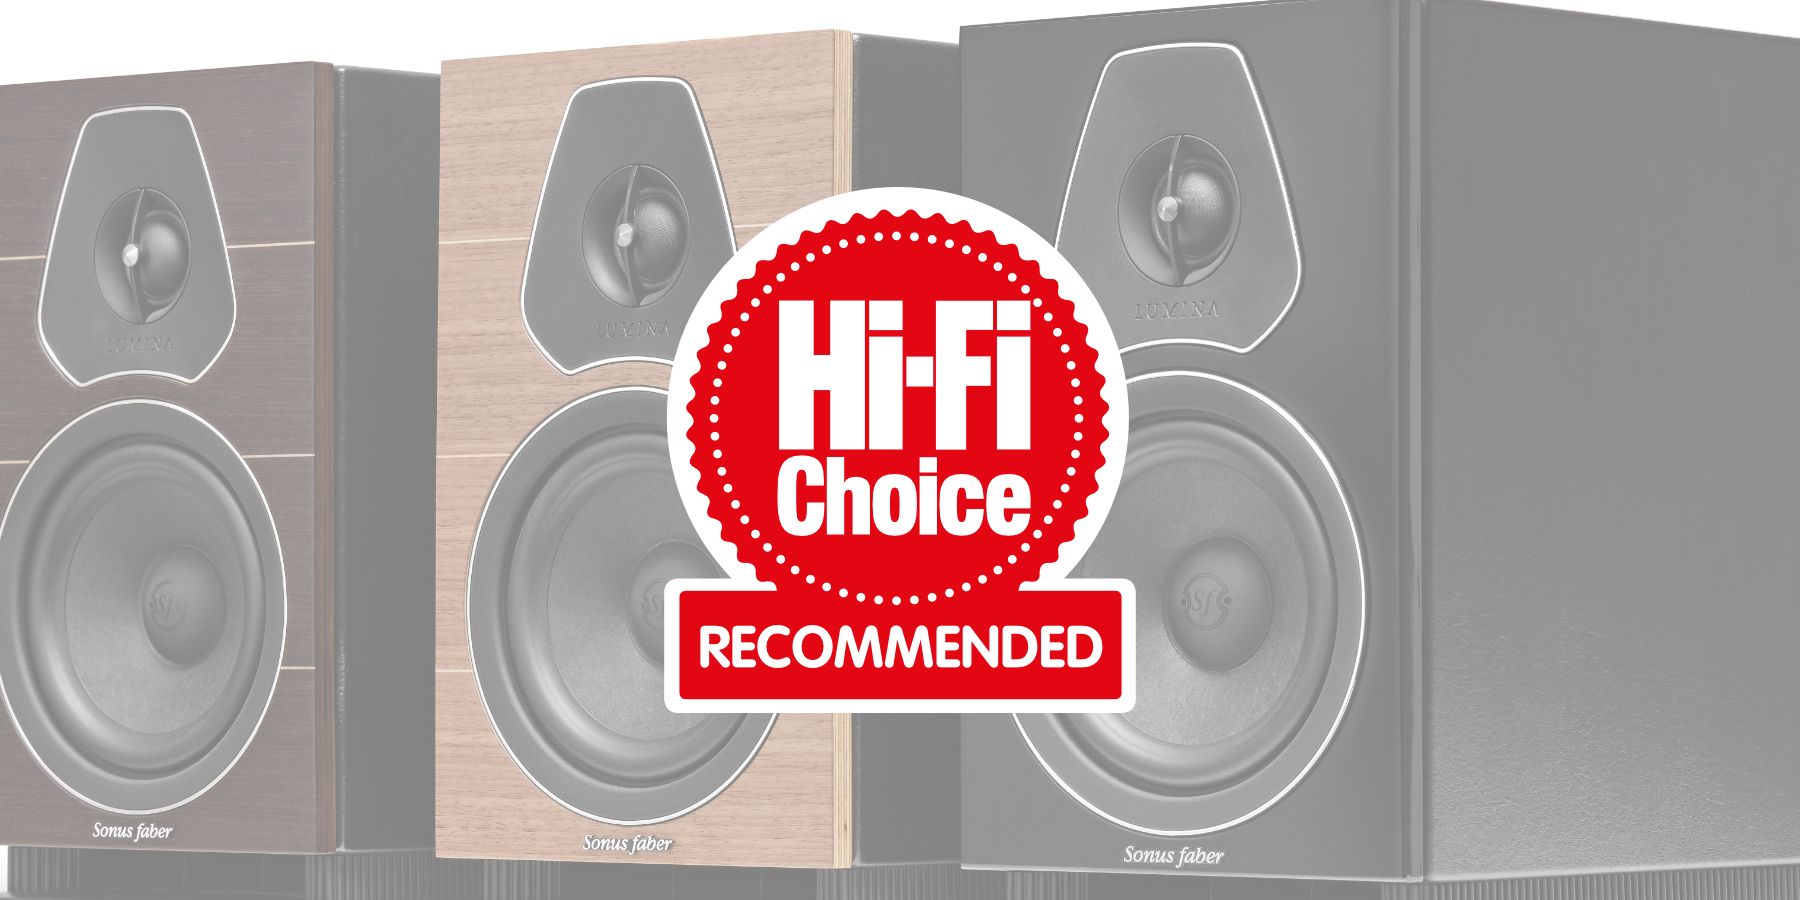 Hi-Fi Choice magazine gives a 'Recommended Award' to Sonus faber's NEW Lumina II speaker